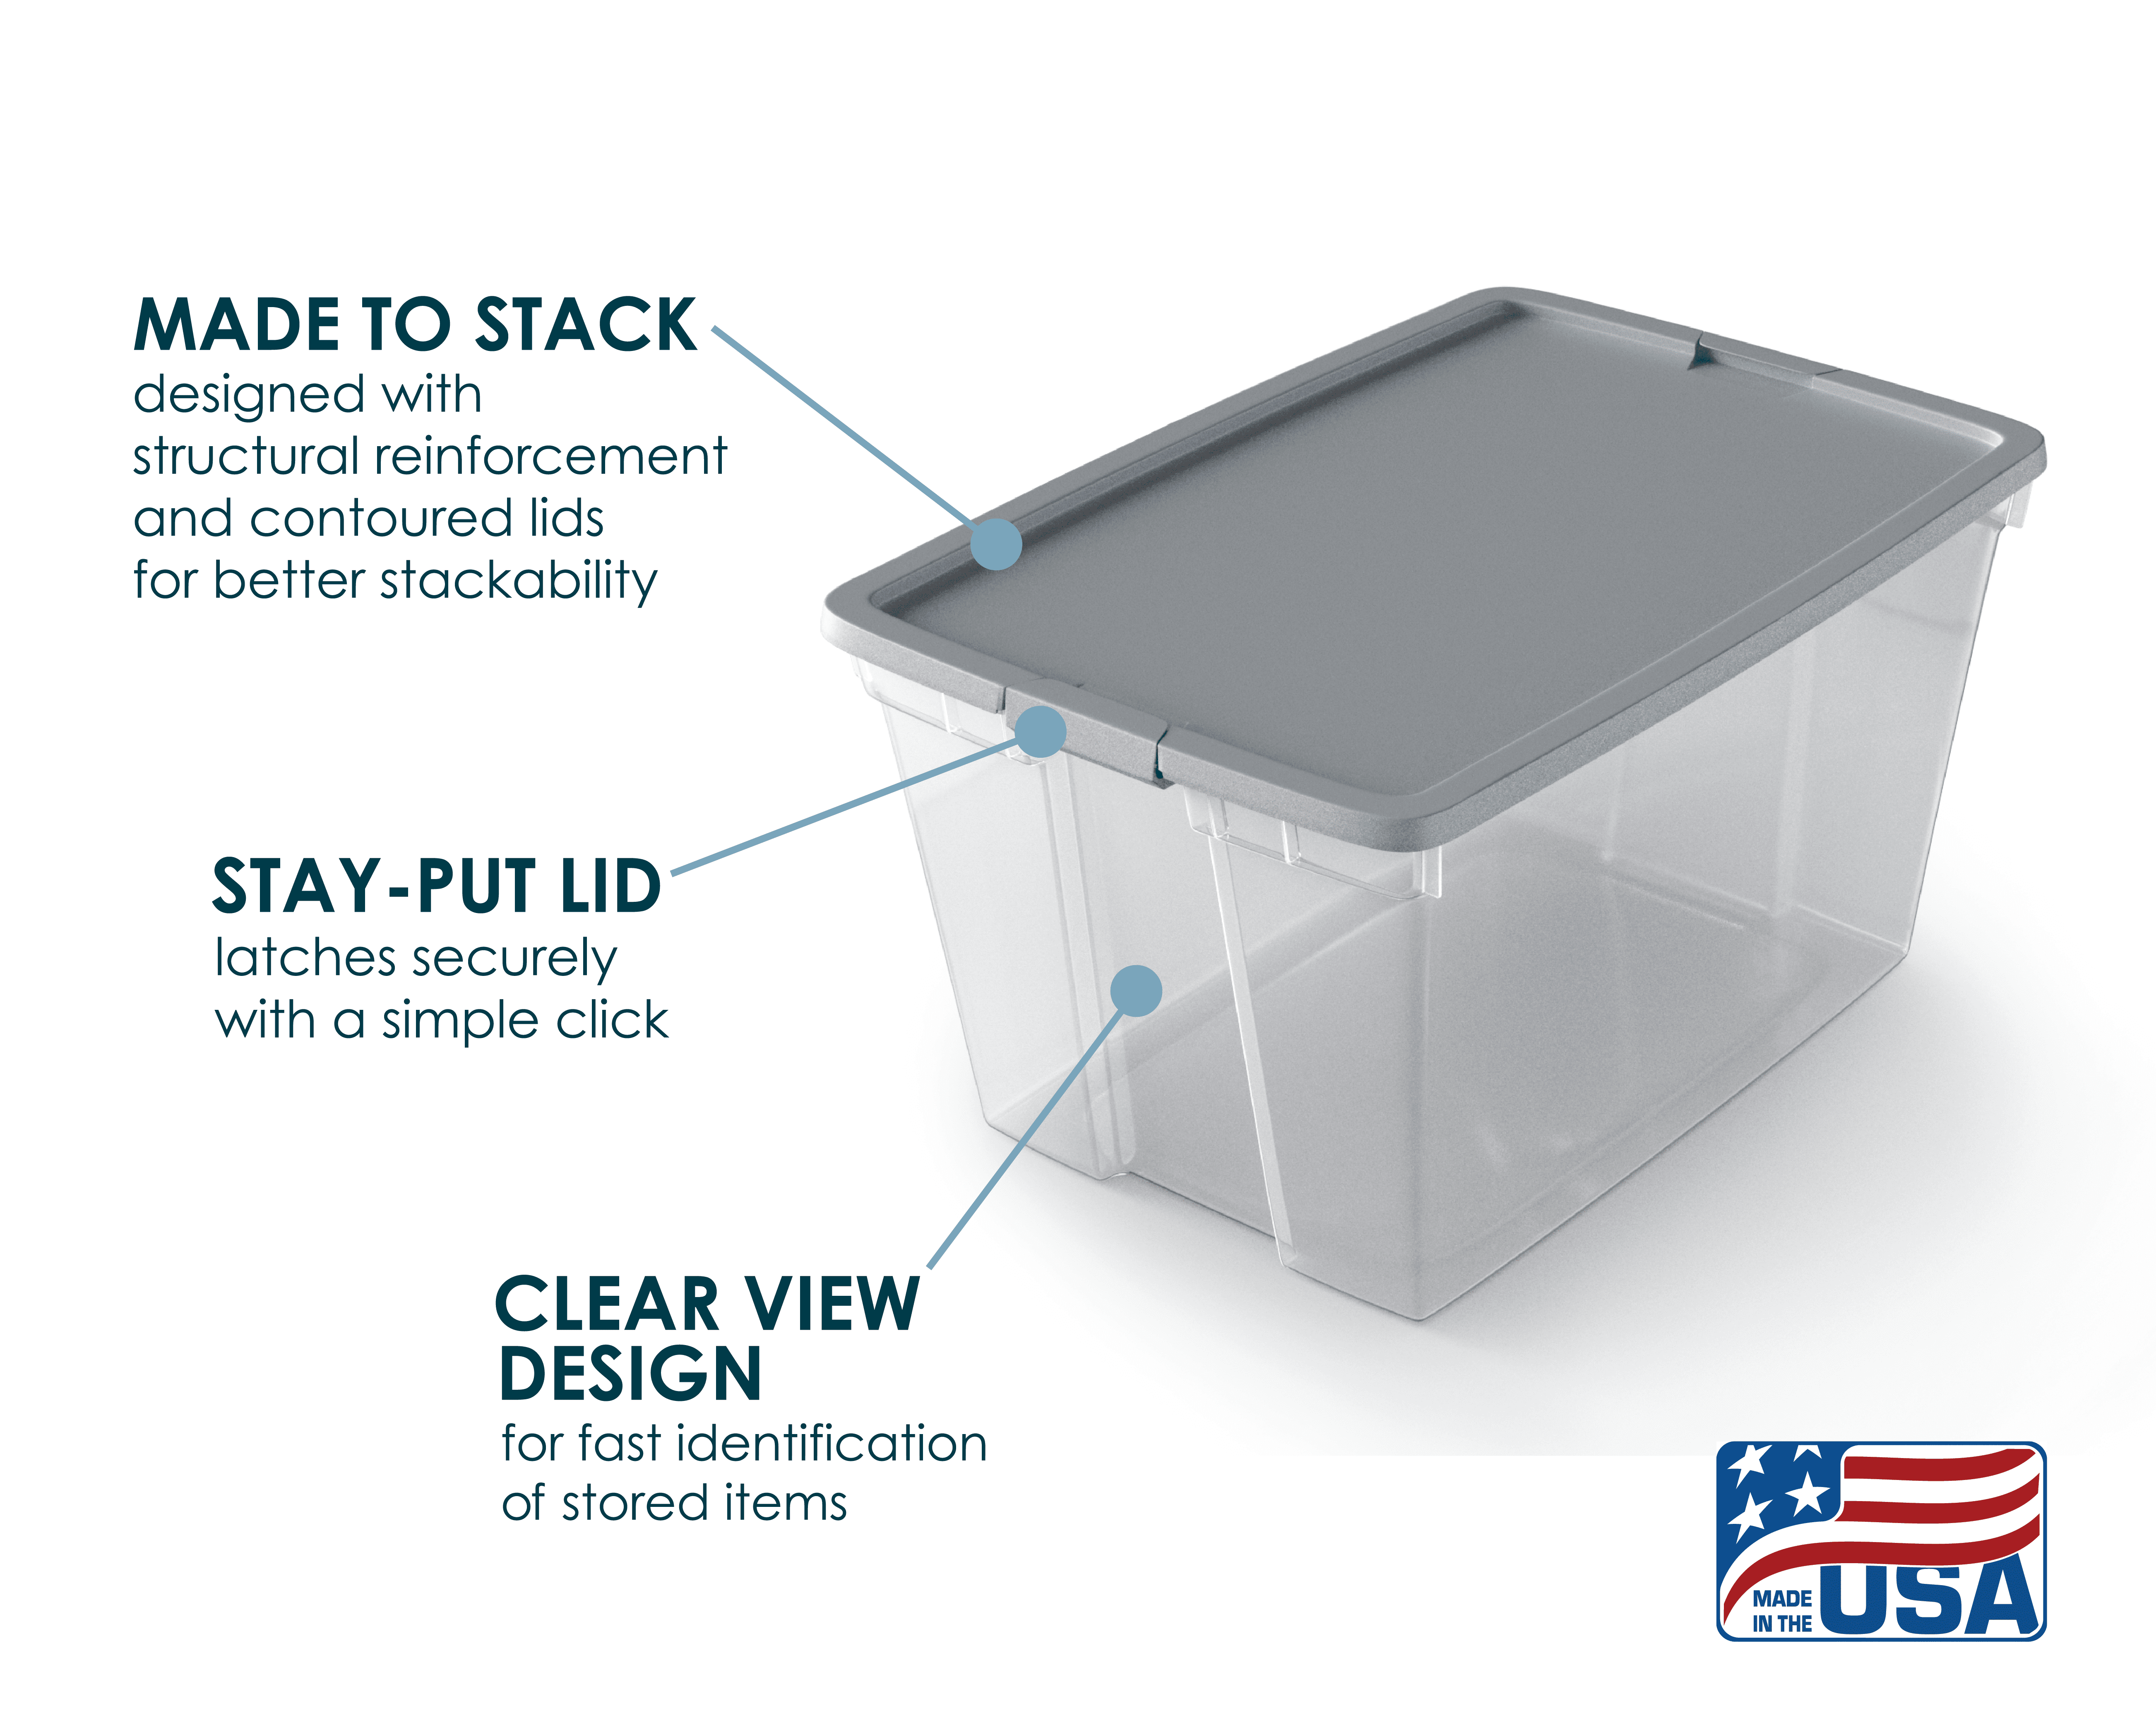 Tstorage 40 Quart Clear Plastic Storage Box with Lid and Wheels, Large Storage Bin, 4 Packs